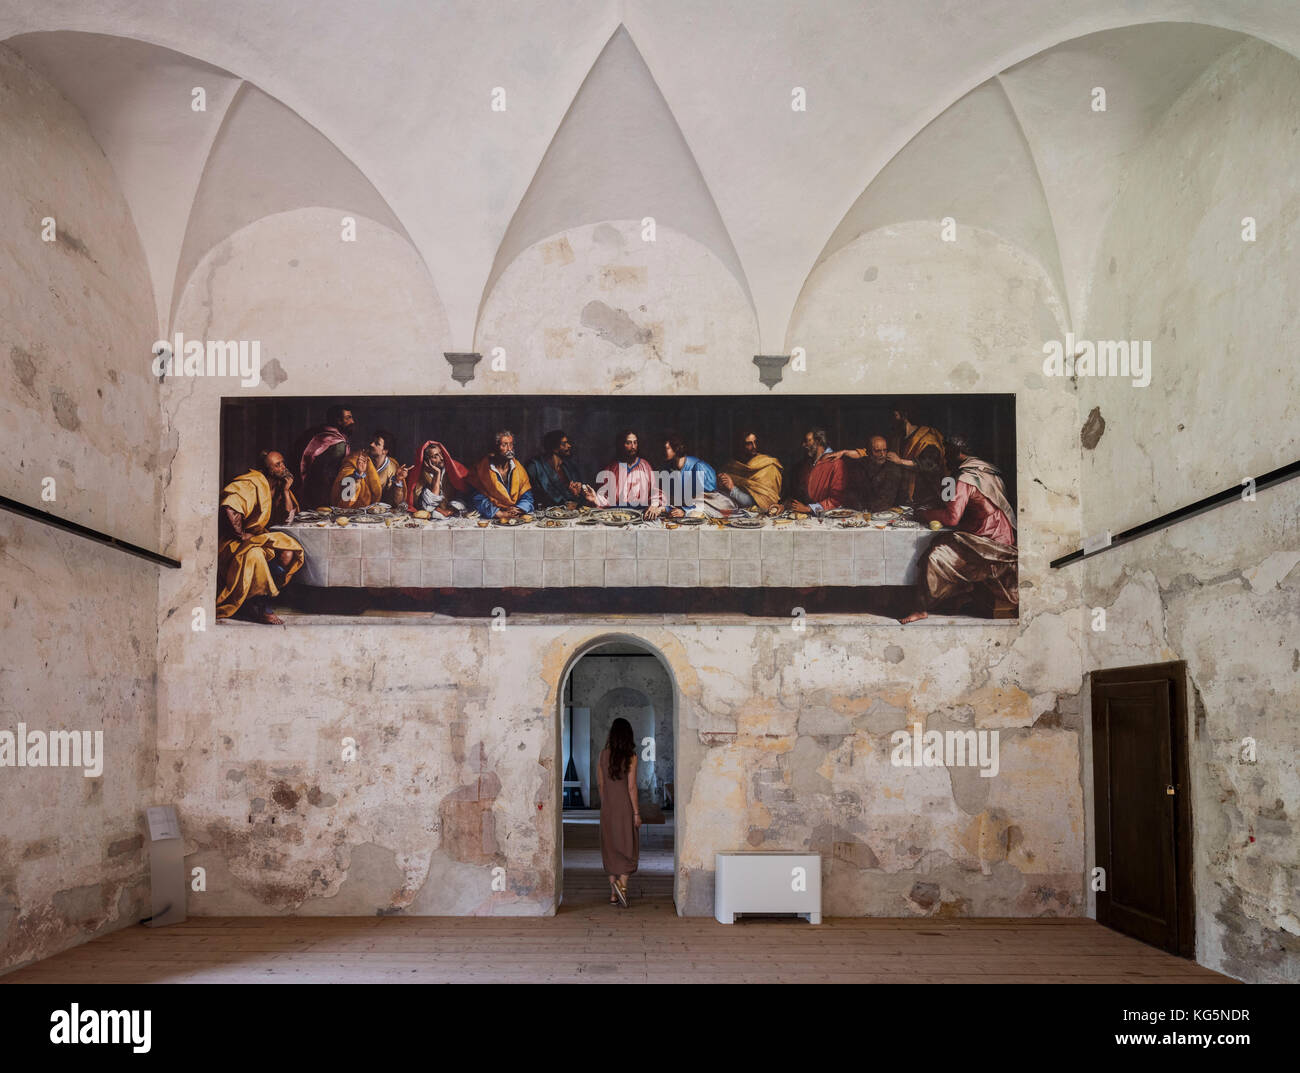 Fresko des Letzten Abendmahl im Refektorium des Klosters von astino, longuelo, Provinz Bergamo, Lombardei, Italien, Europa Stockfoto